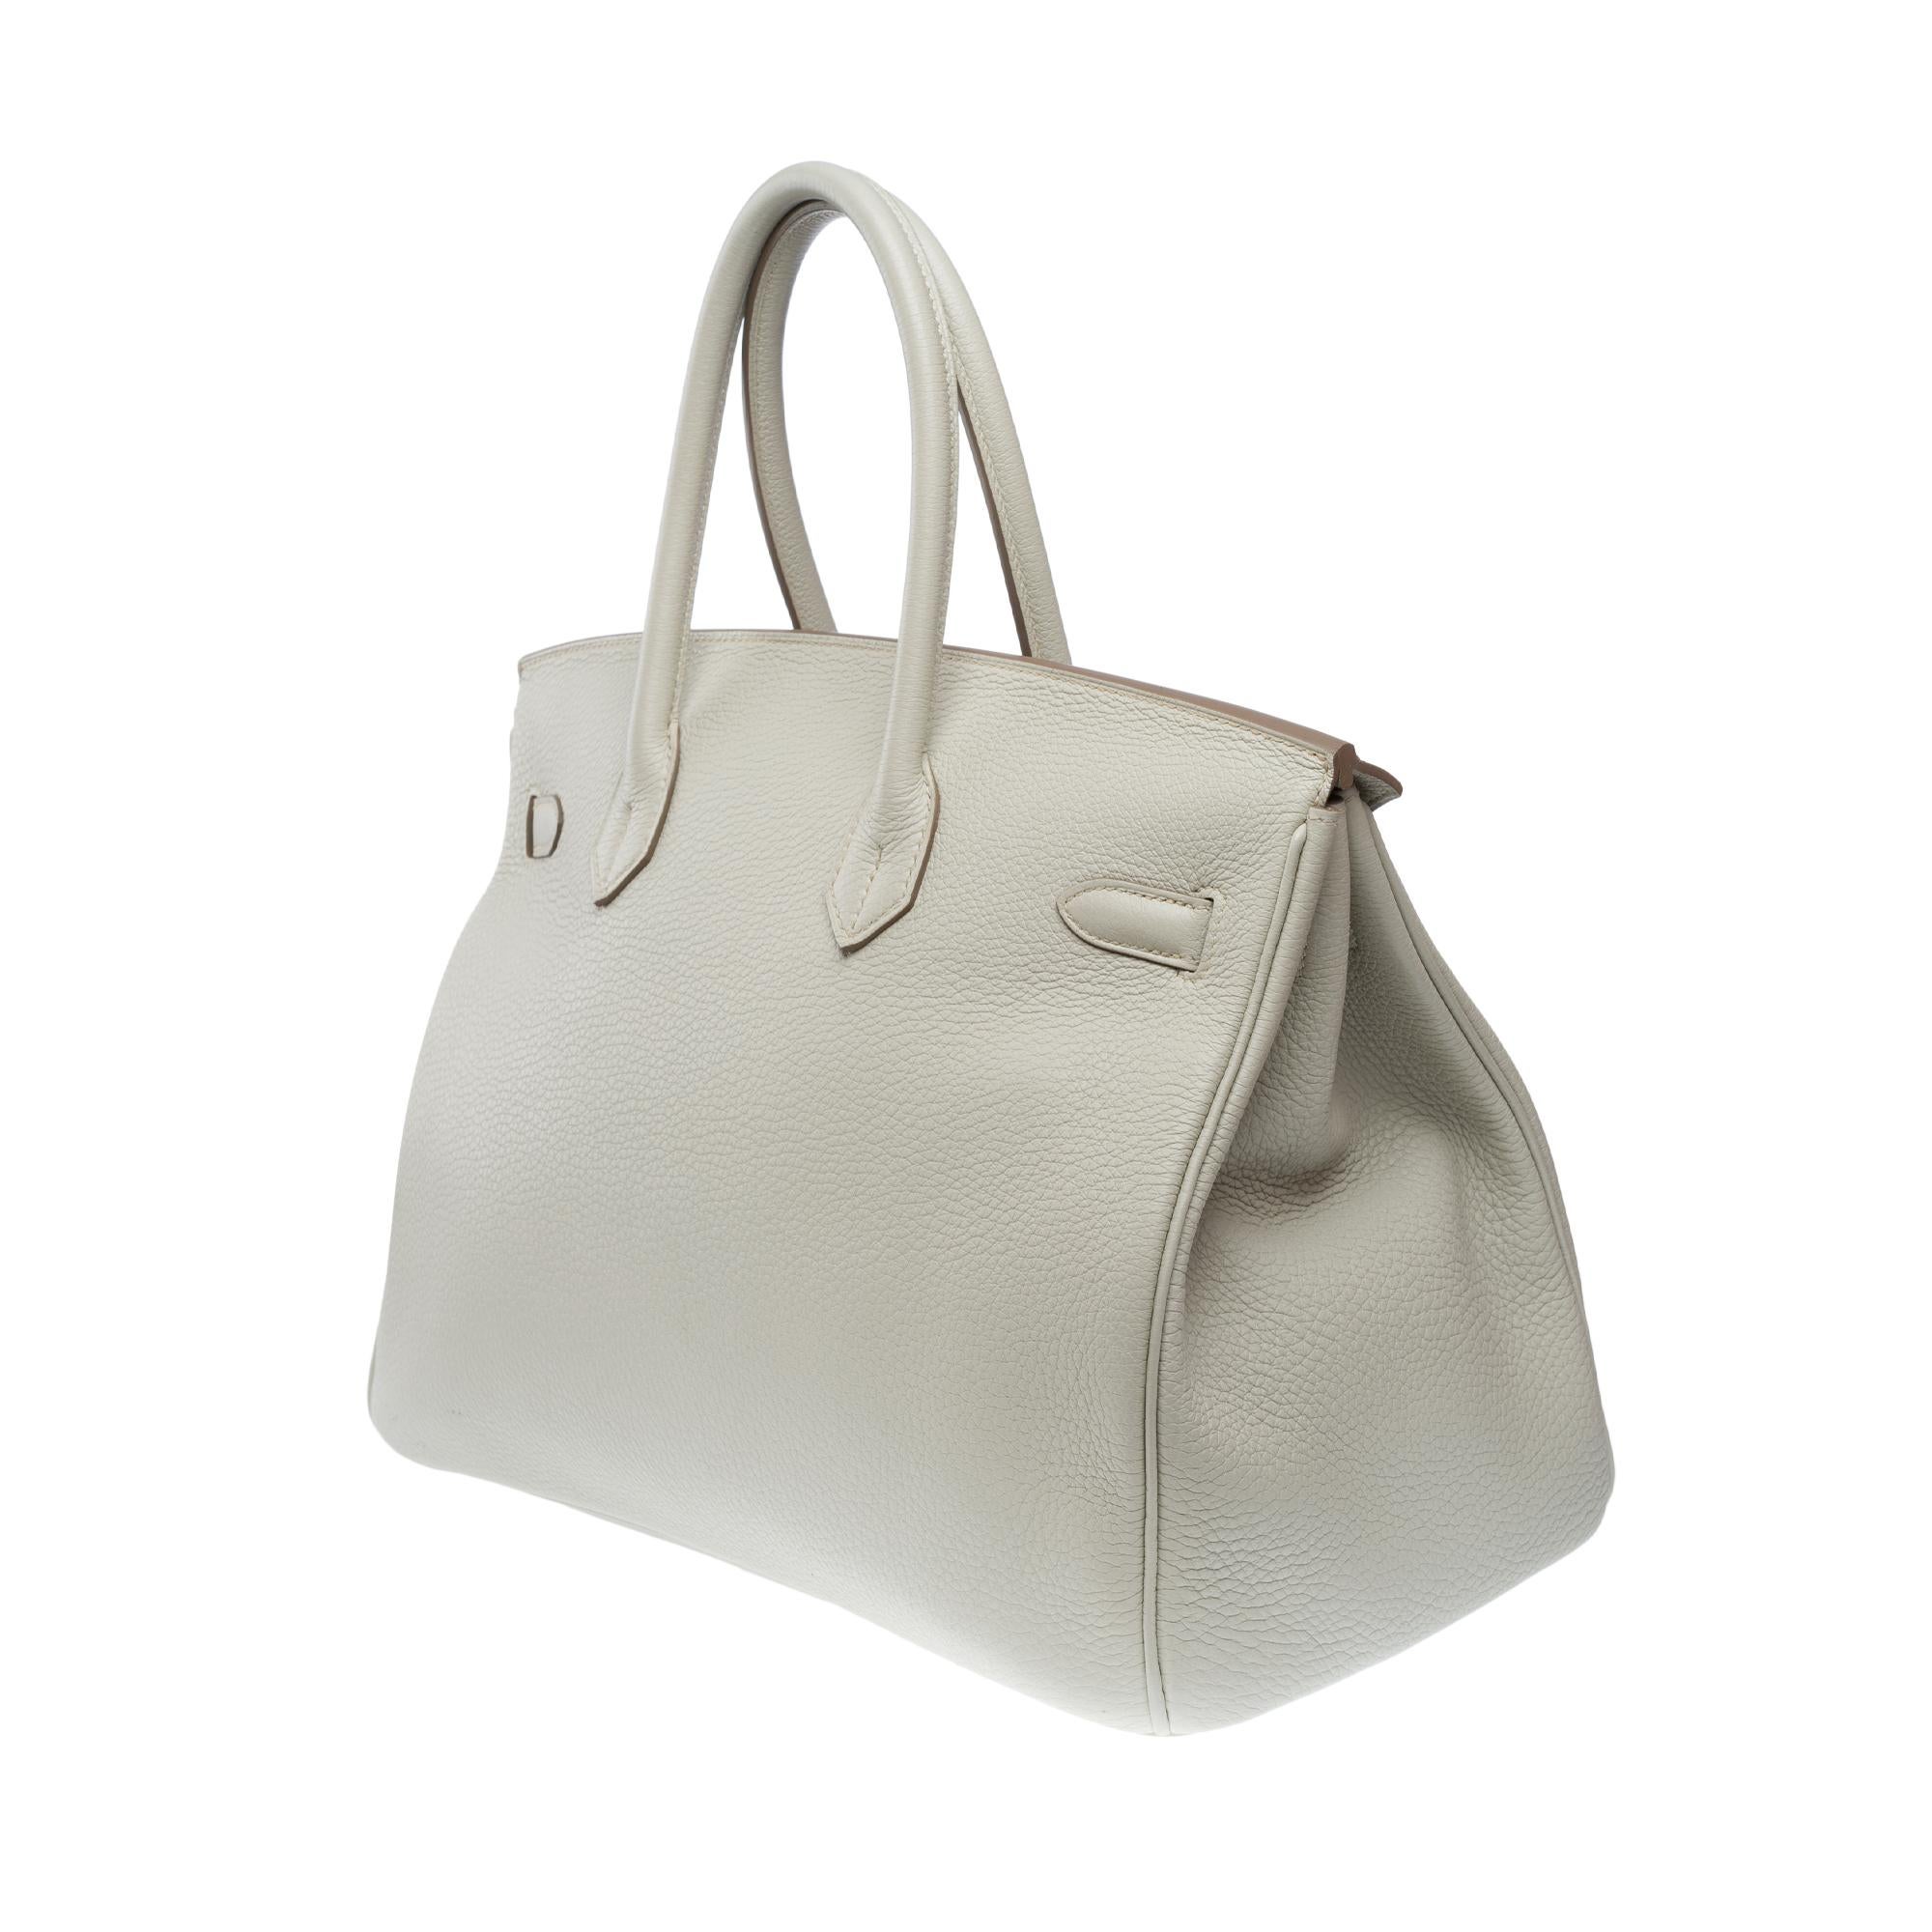 Amazing Hermès Birkin 35 handbag in Gris Perle Togo Calf leather, SHW For Sale 3